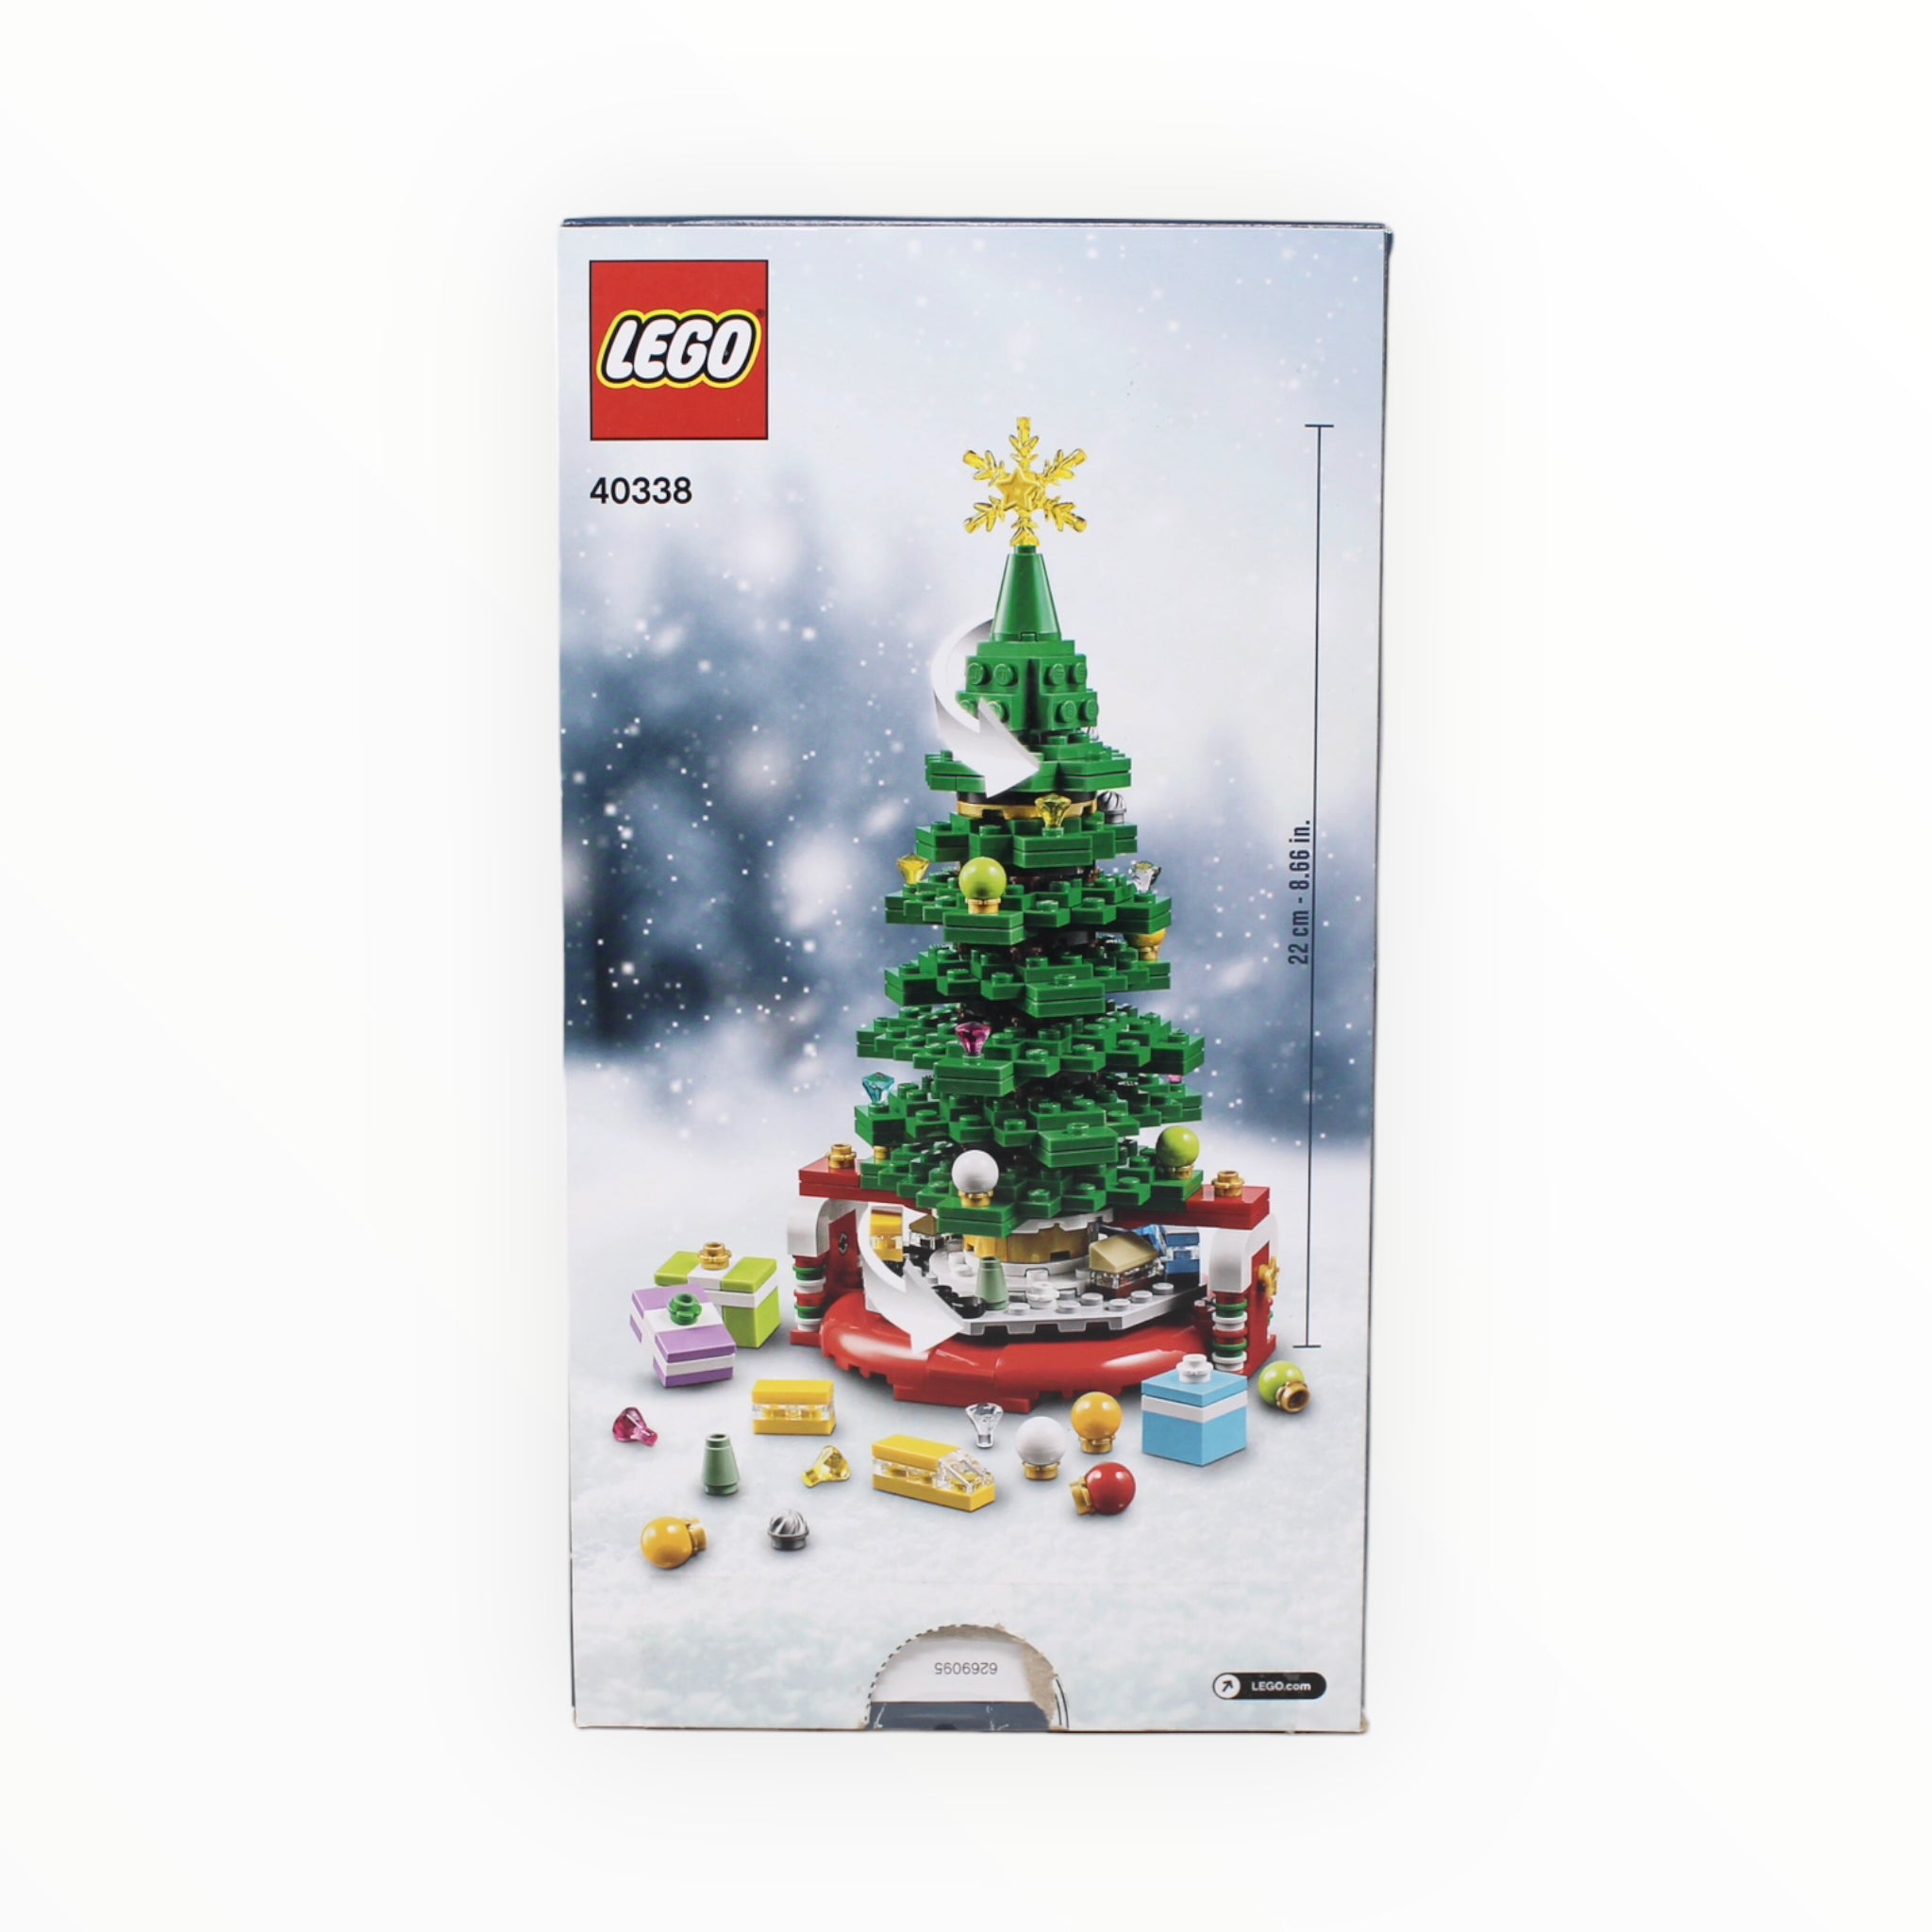 Certified Used Set 40338 LEGO Christmas Tree (2019)